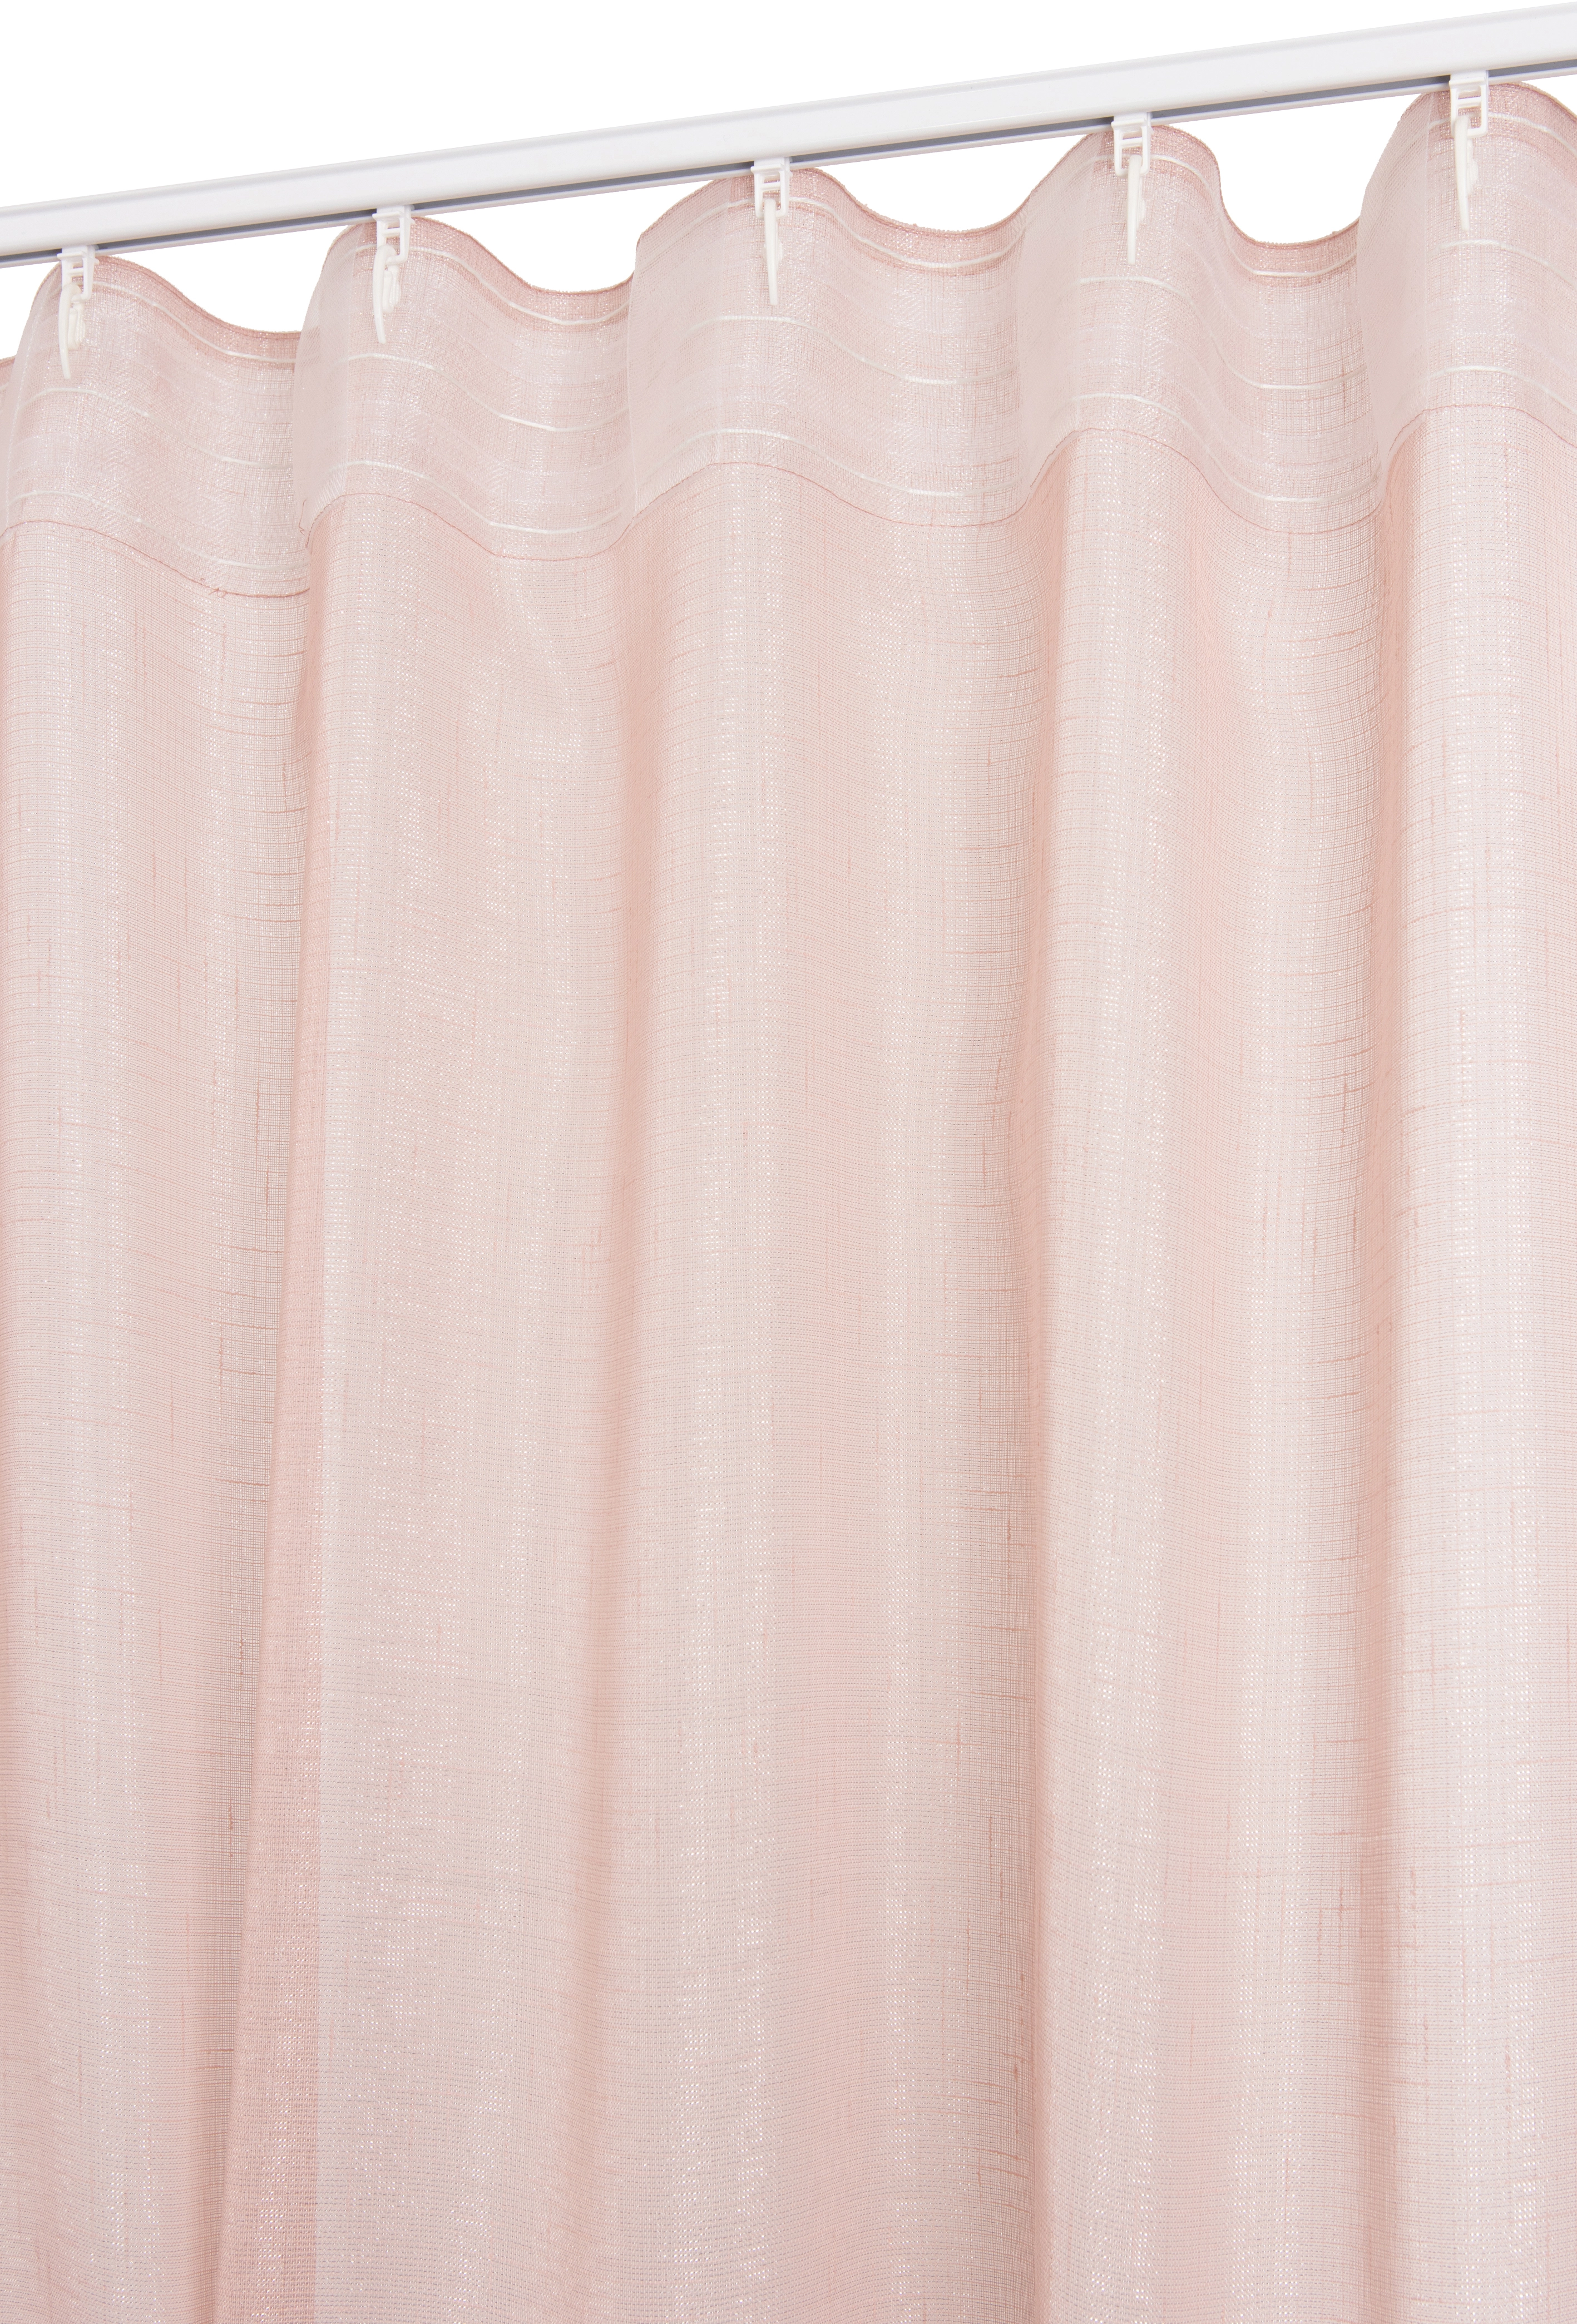 Tenda arredo Elaura L.135xH.300 cm, rosa chiaro